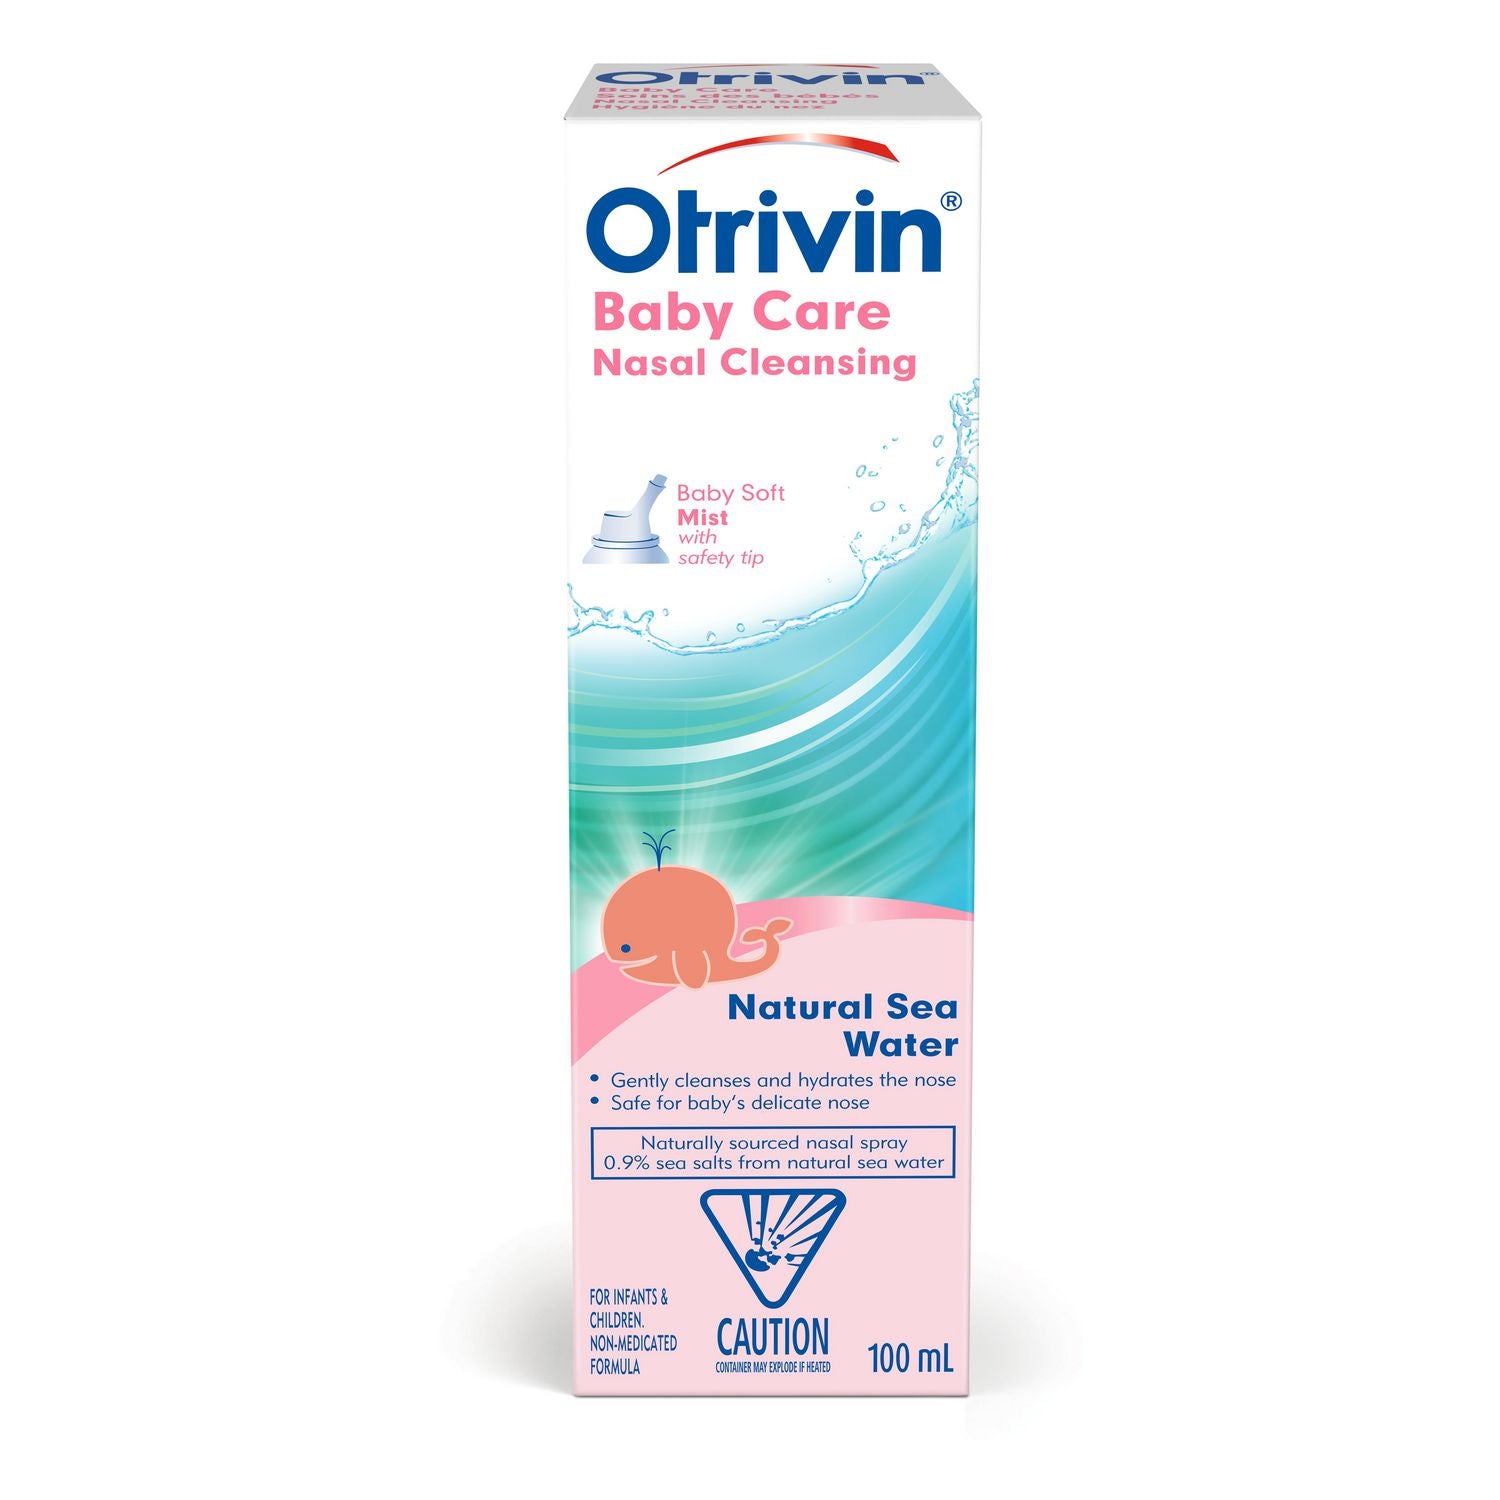 Otrivin Baby Care Nasal Cleansing - 100 ml